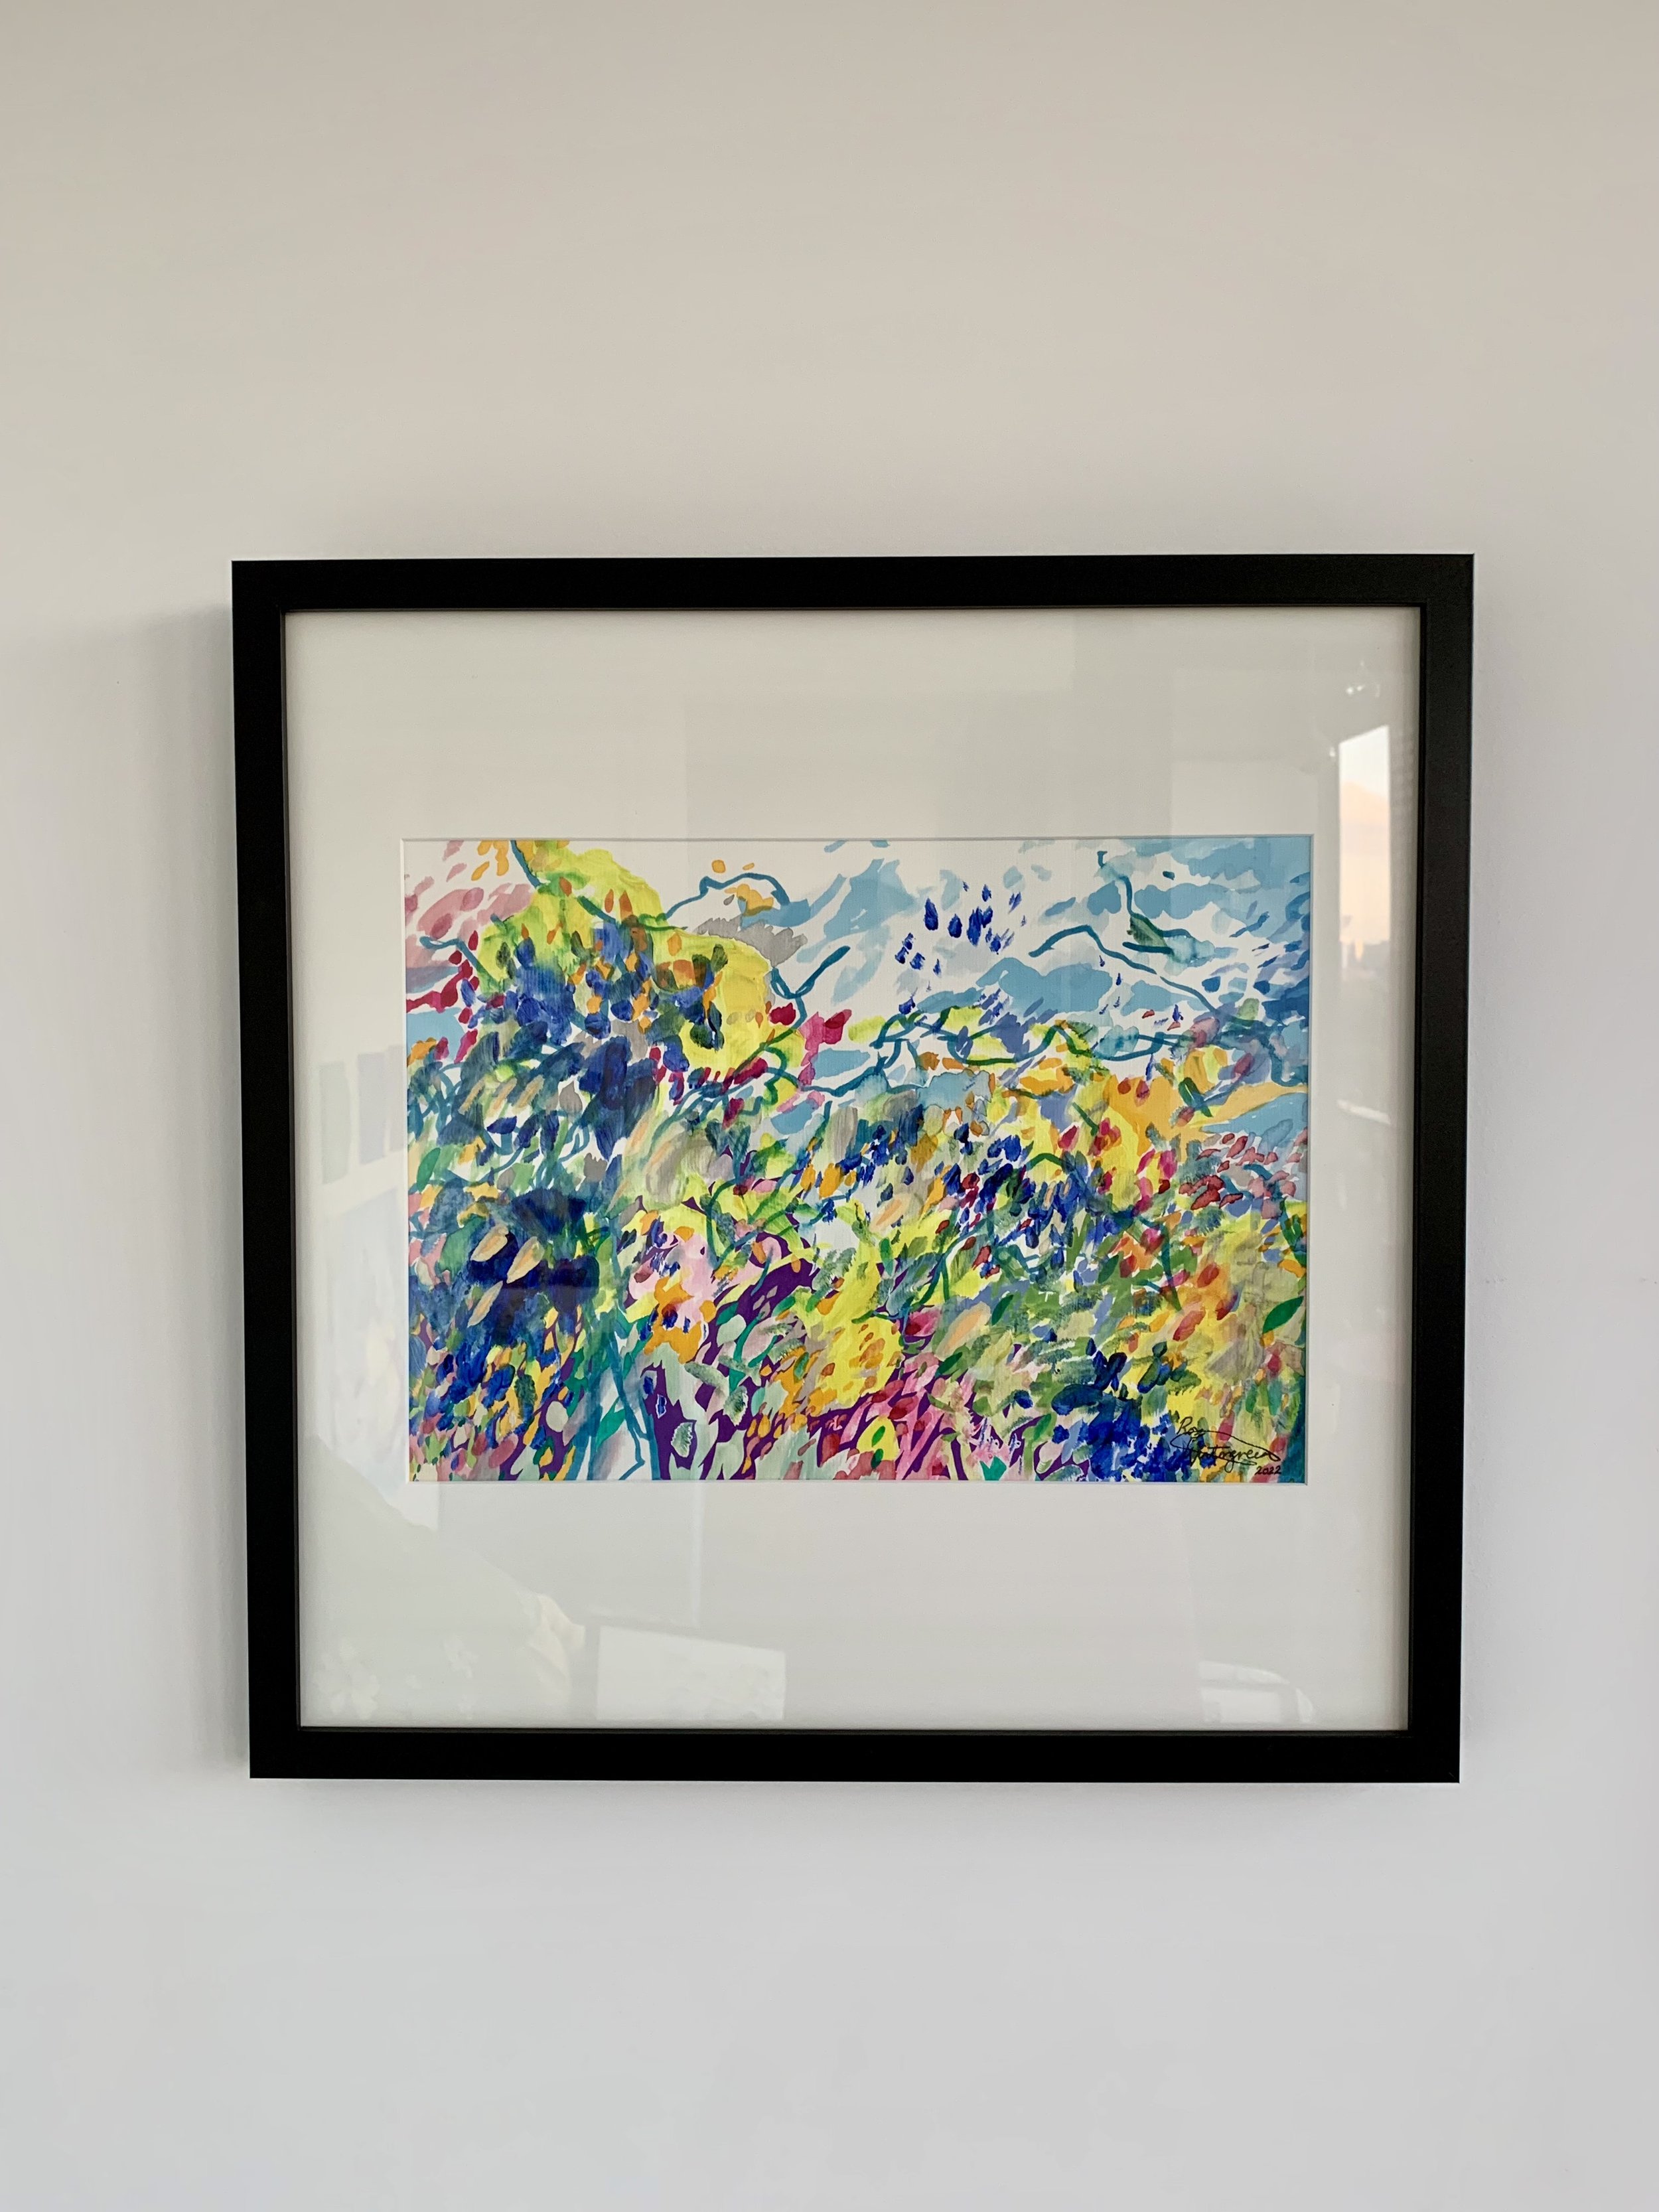 I will shimmer like summer breeze (framed)_vibrant happy abstract art_by Australian artist Rose Wintergreen 2022.JPG